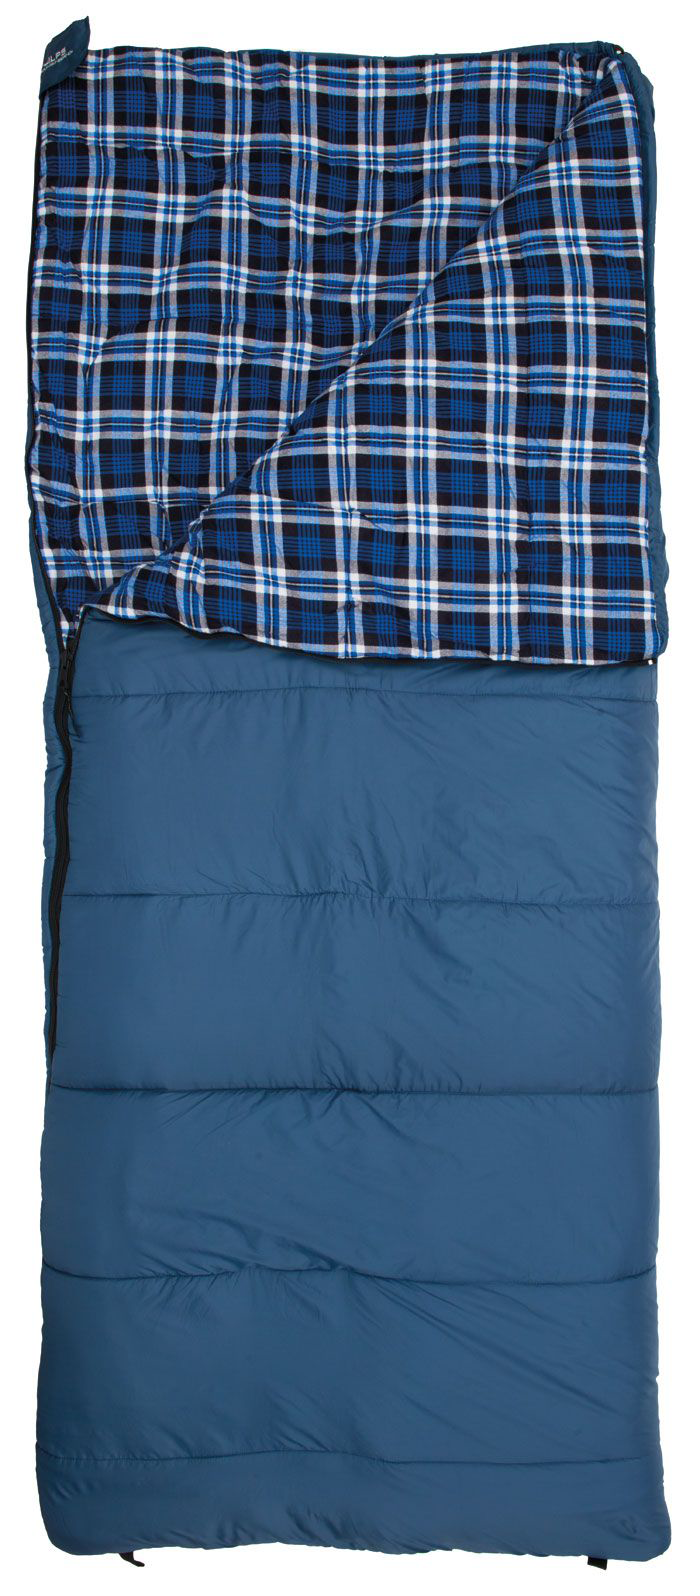 ALPS Mountaineering Camper Flannel OF 45 Rectangular Sleeping Bag